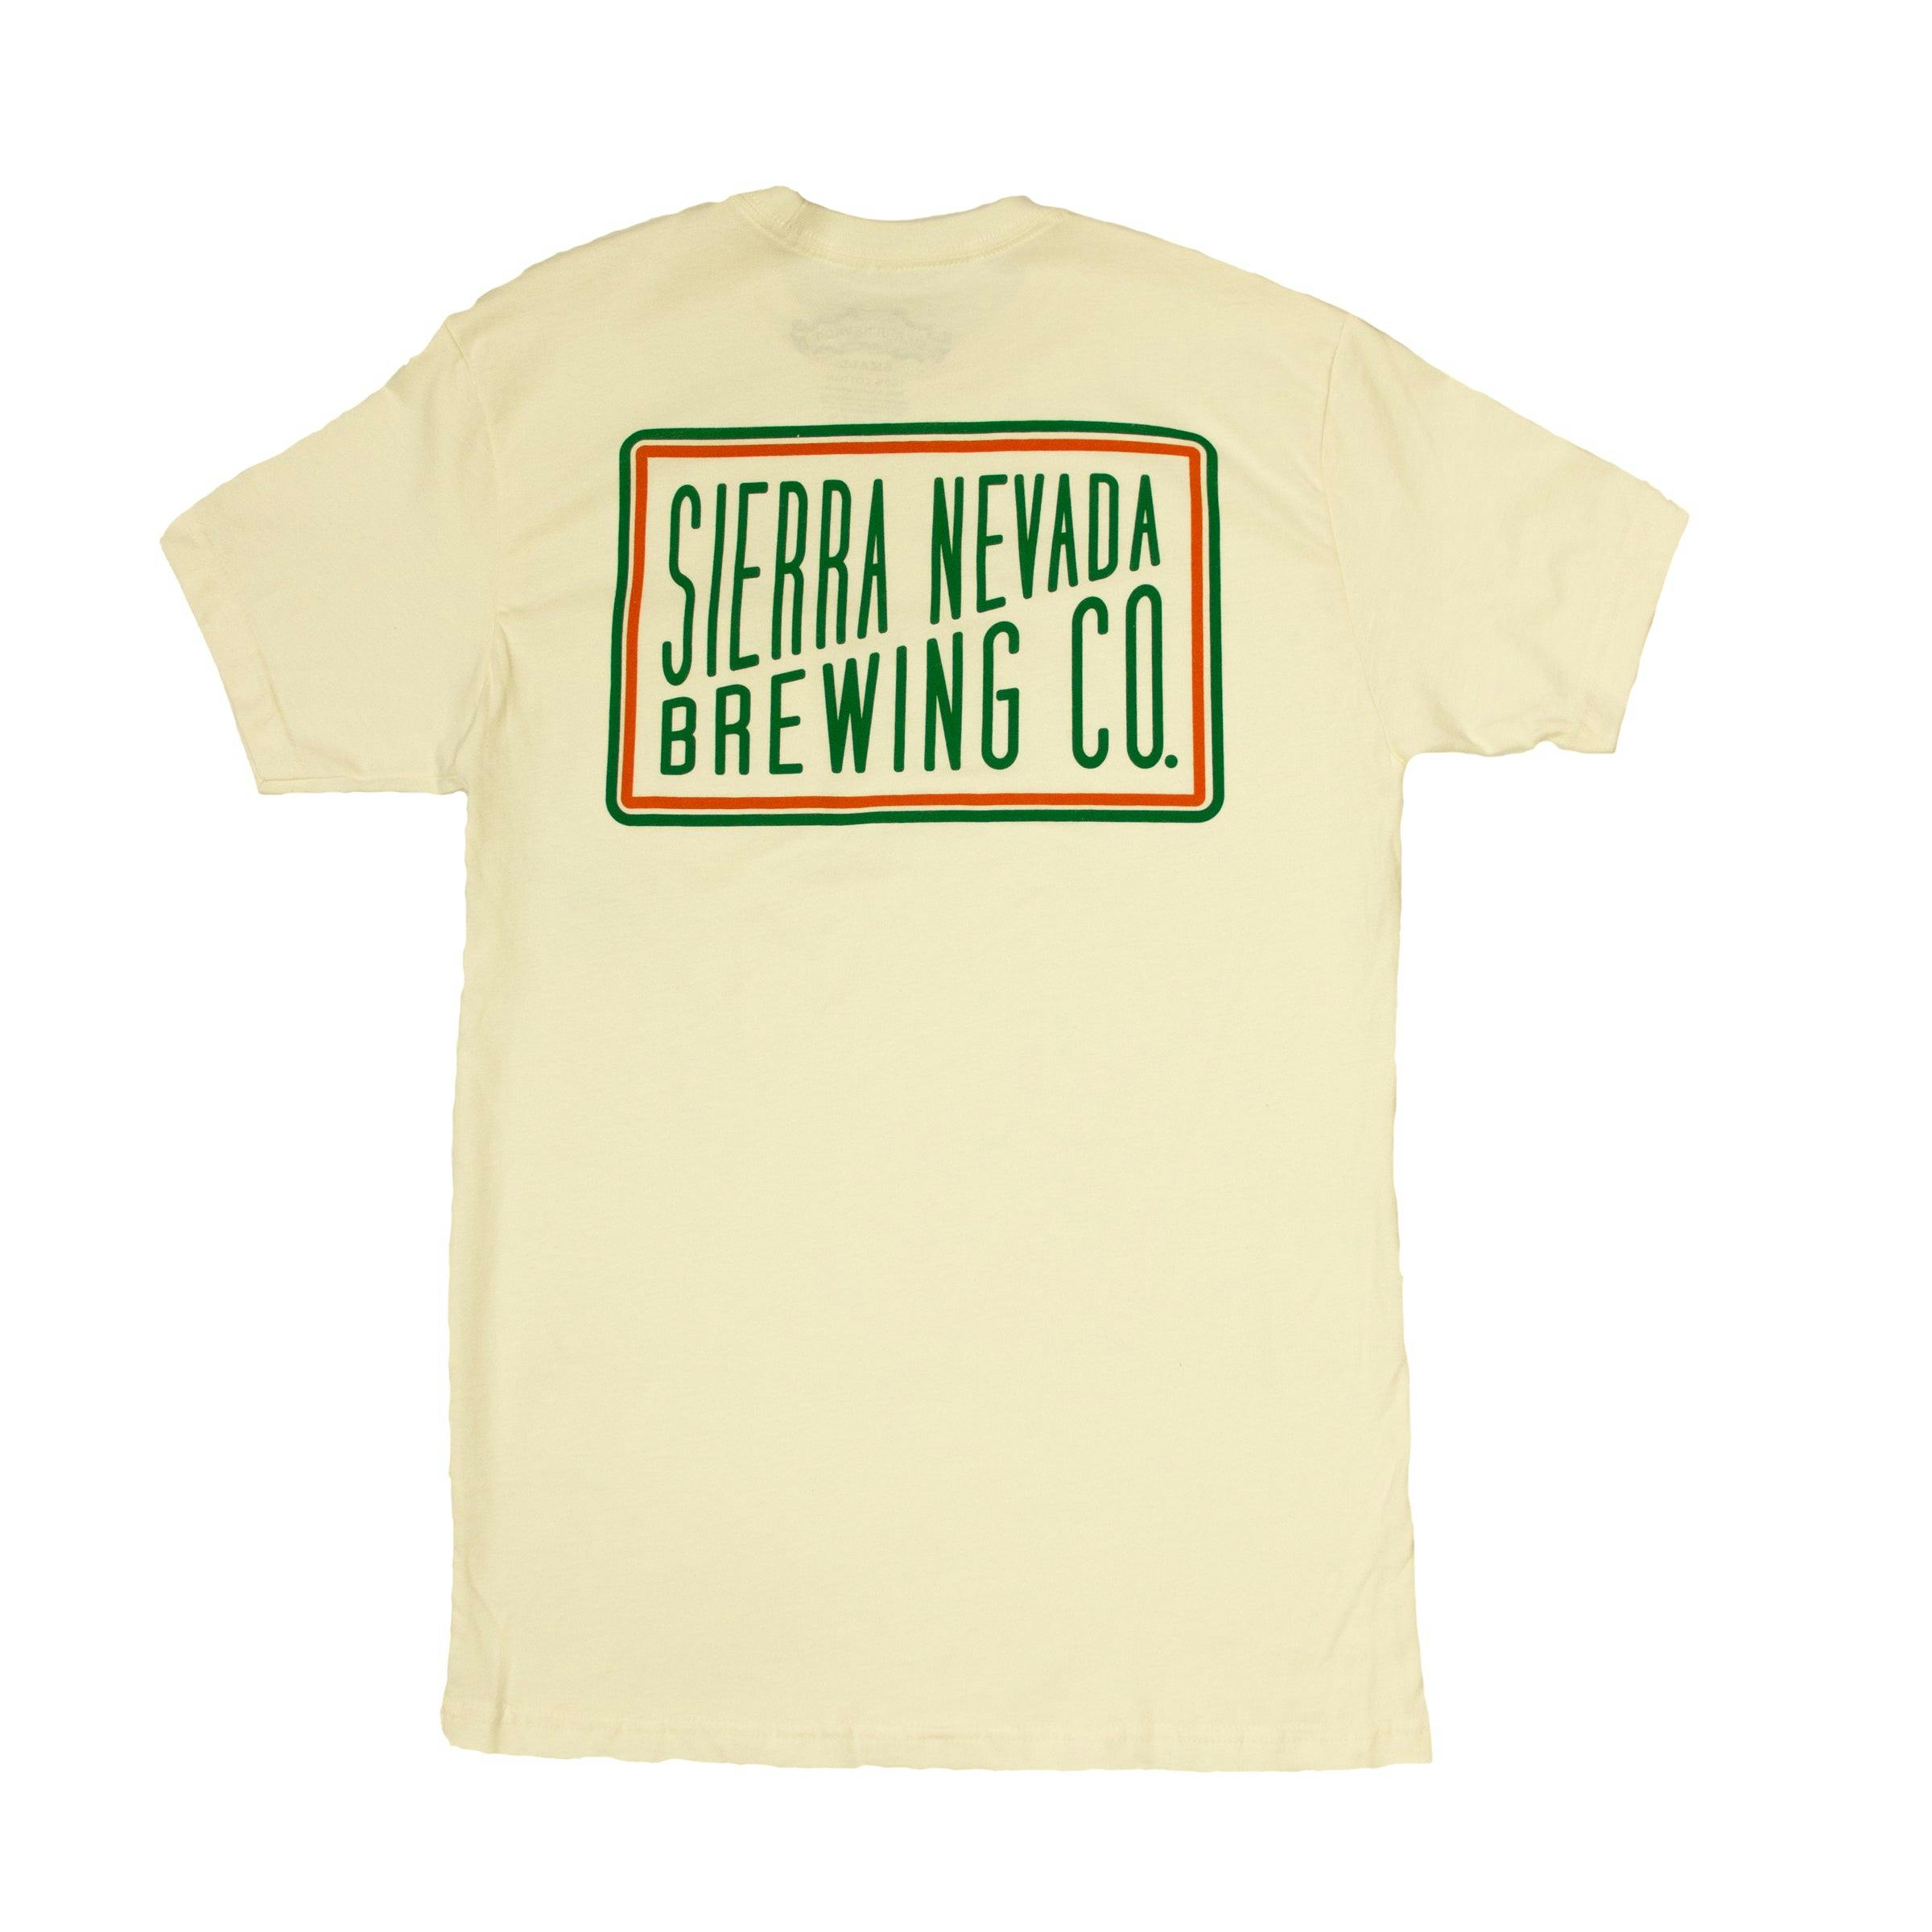 snbc pocket tee back with sierra nevada brewing logo